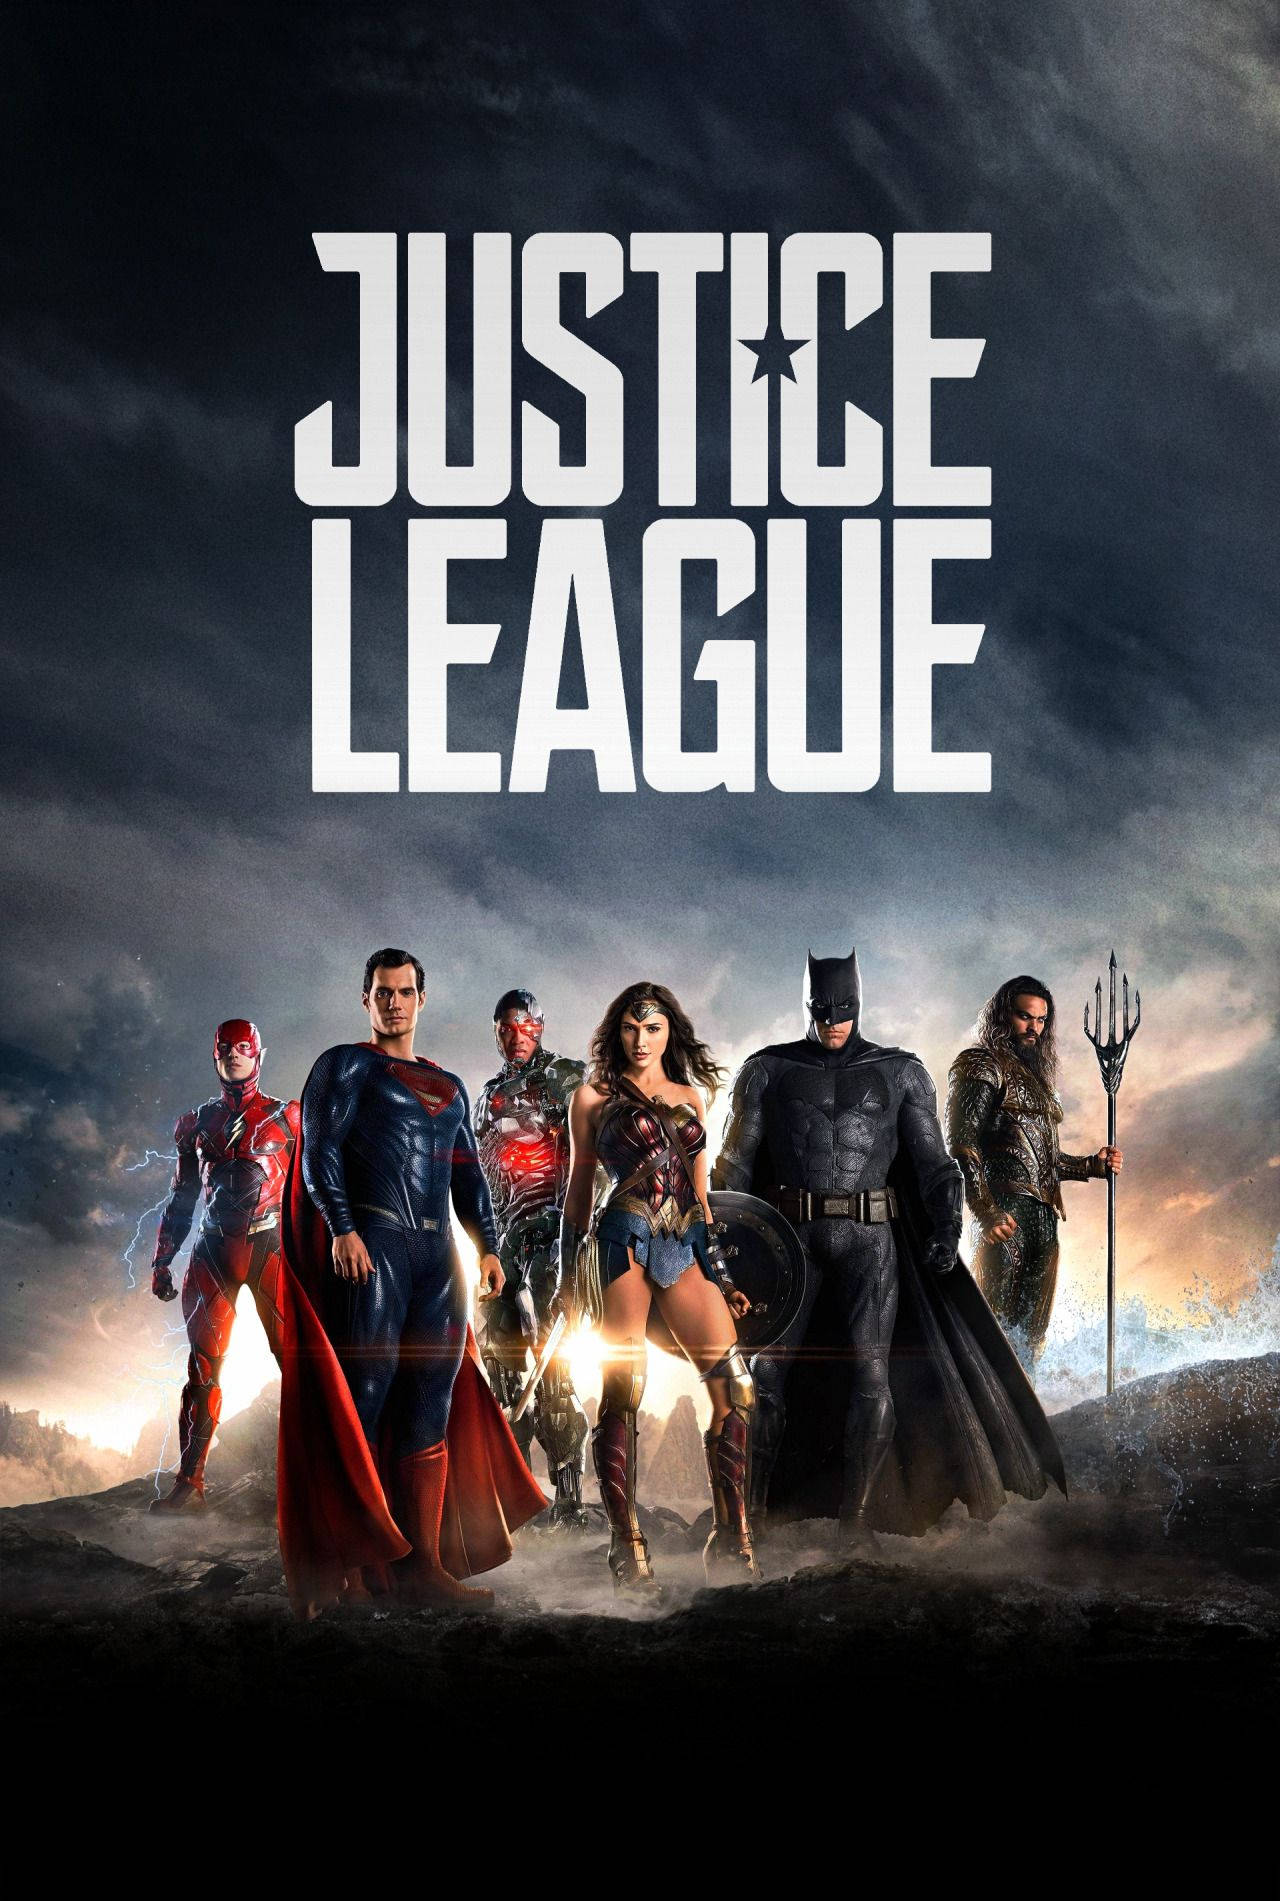 Justice League Title Phone